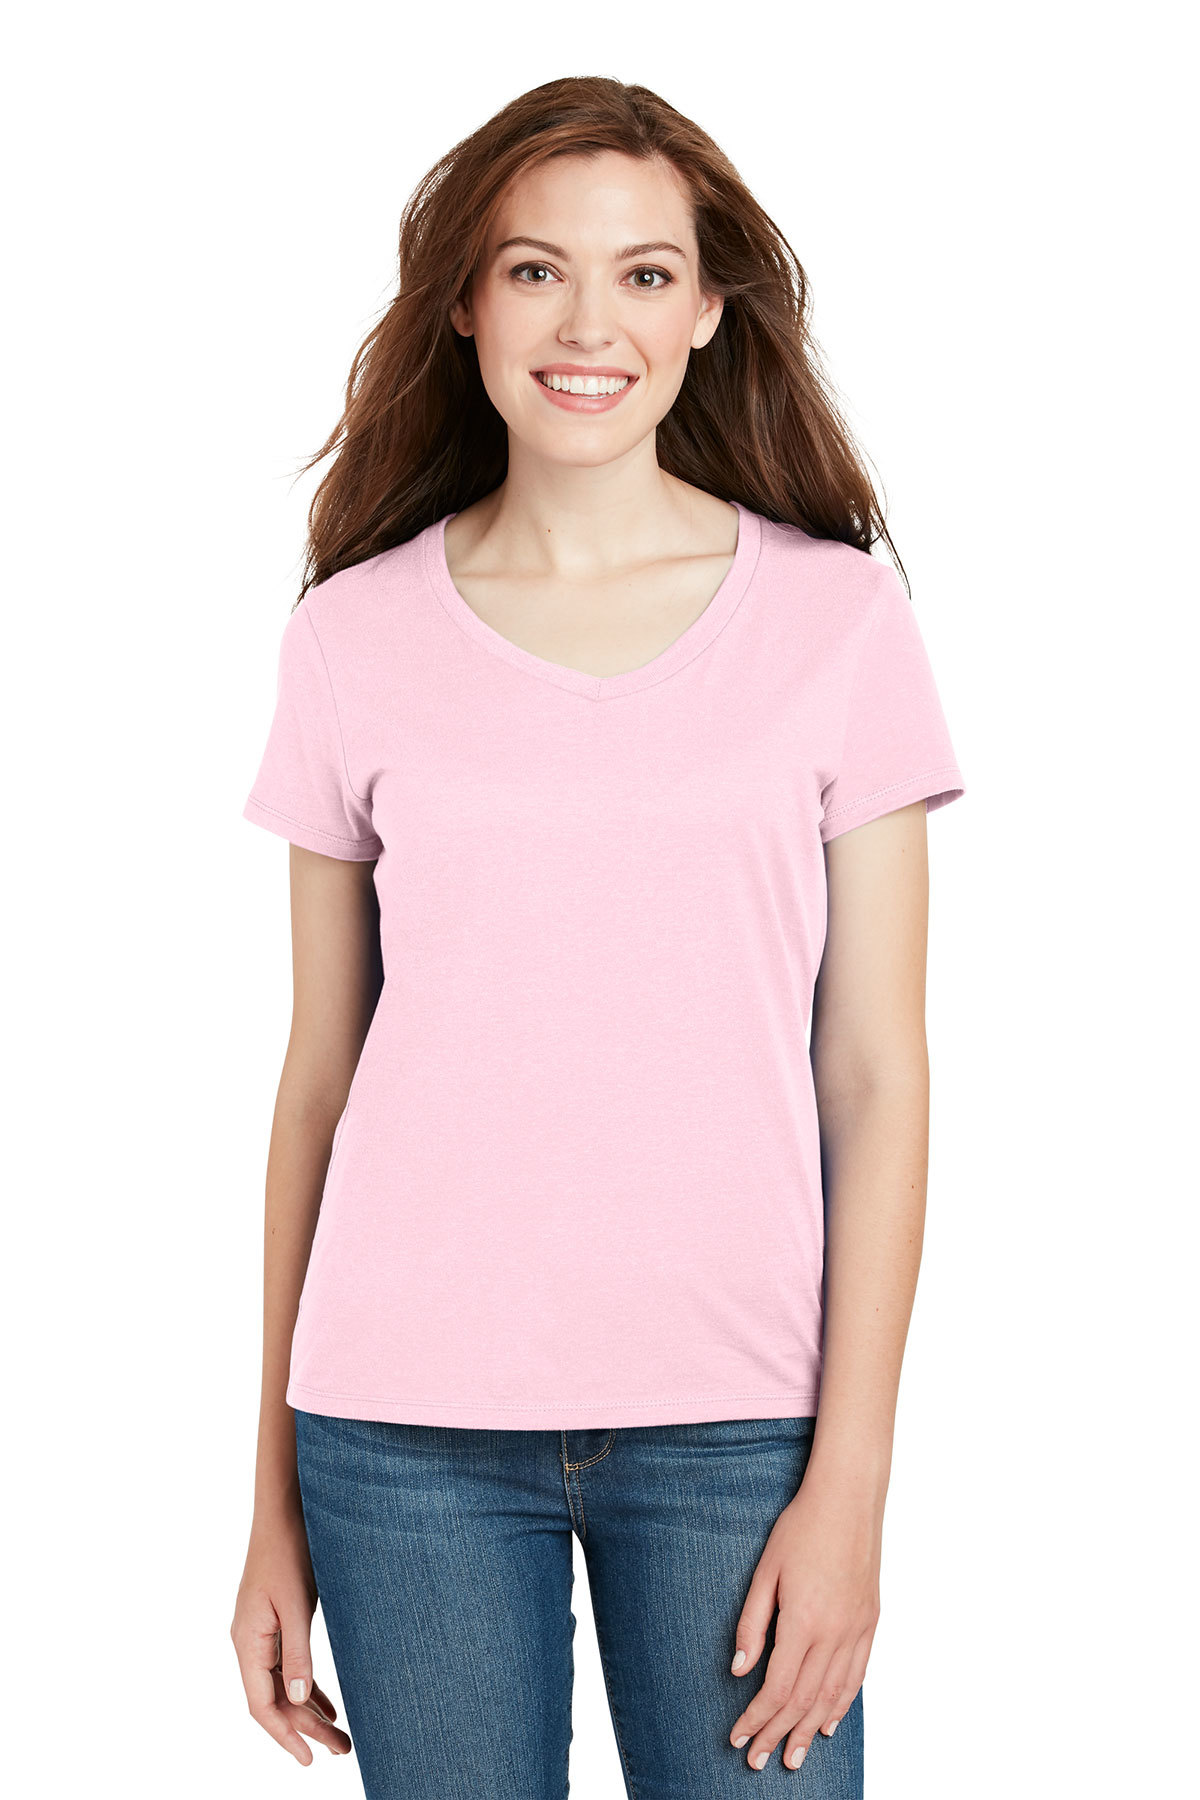 Elendig medley tildeling Hanes Ladies Perfect-T Cotton V-Neck T-Shirt | Product | SanMar